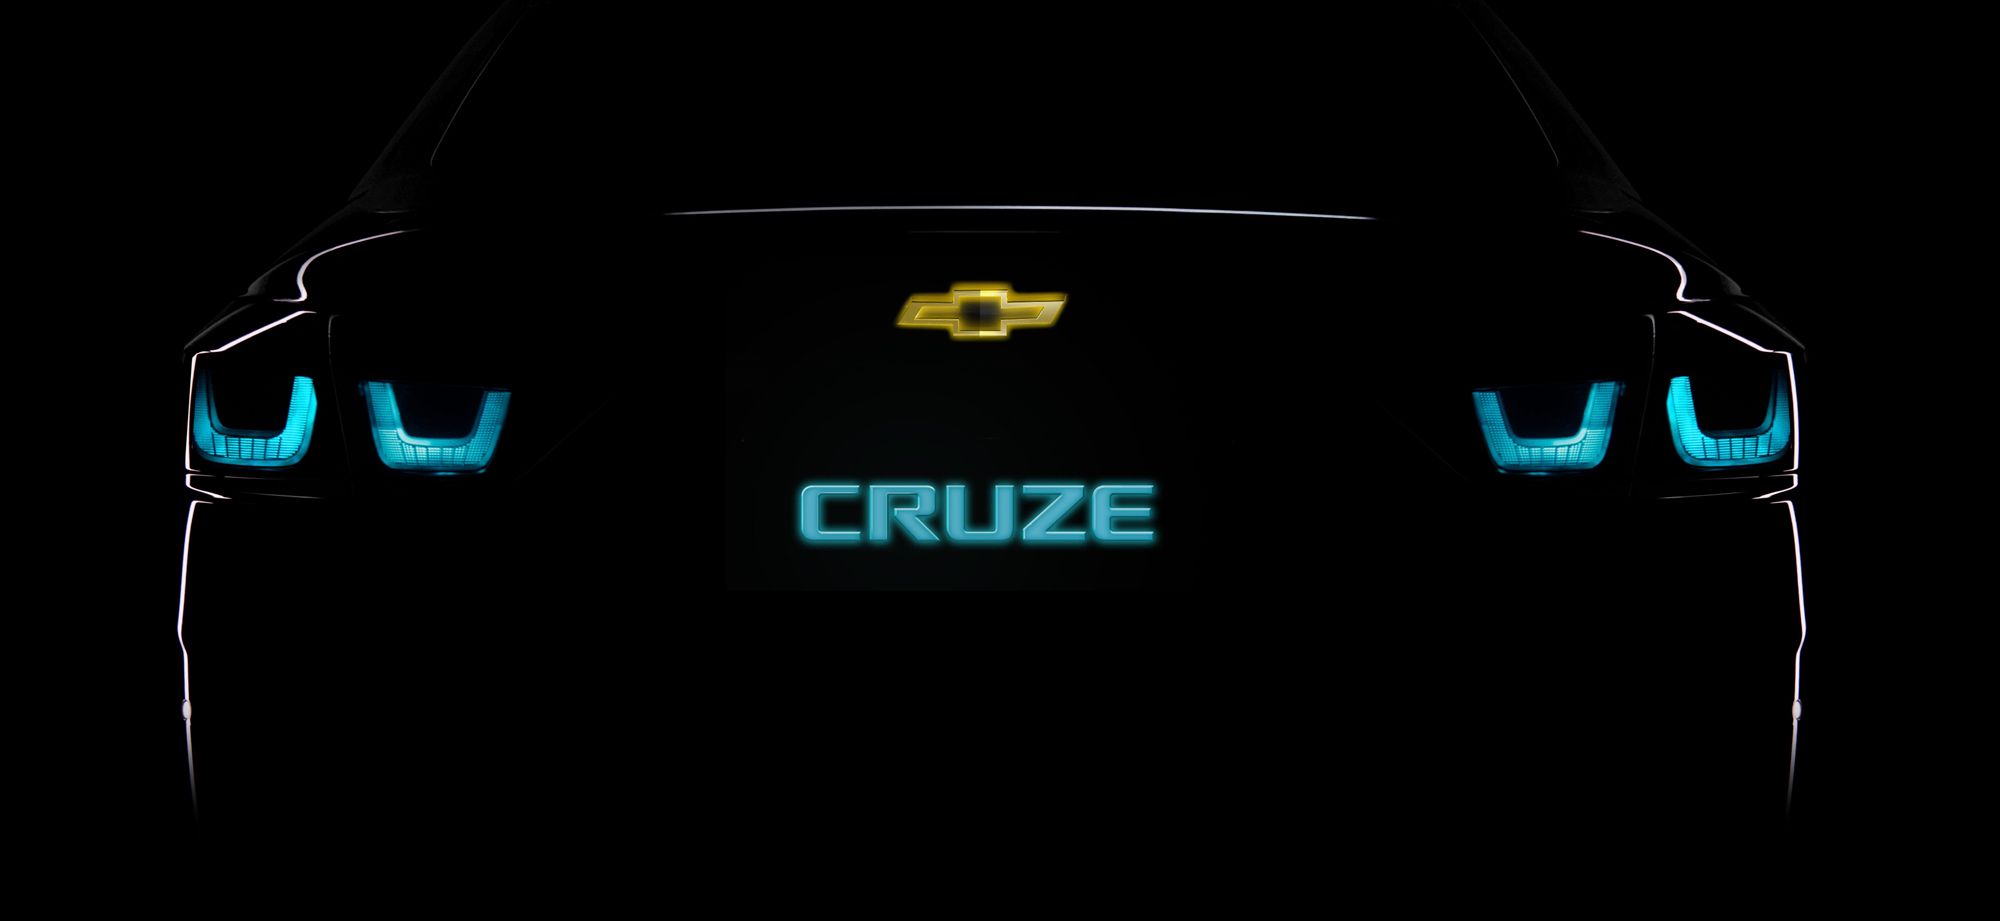 2016 Chevrolet Cruze Tron Legacy Edition